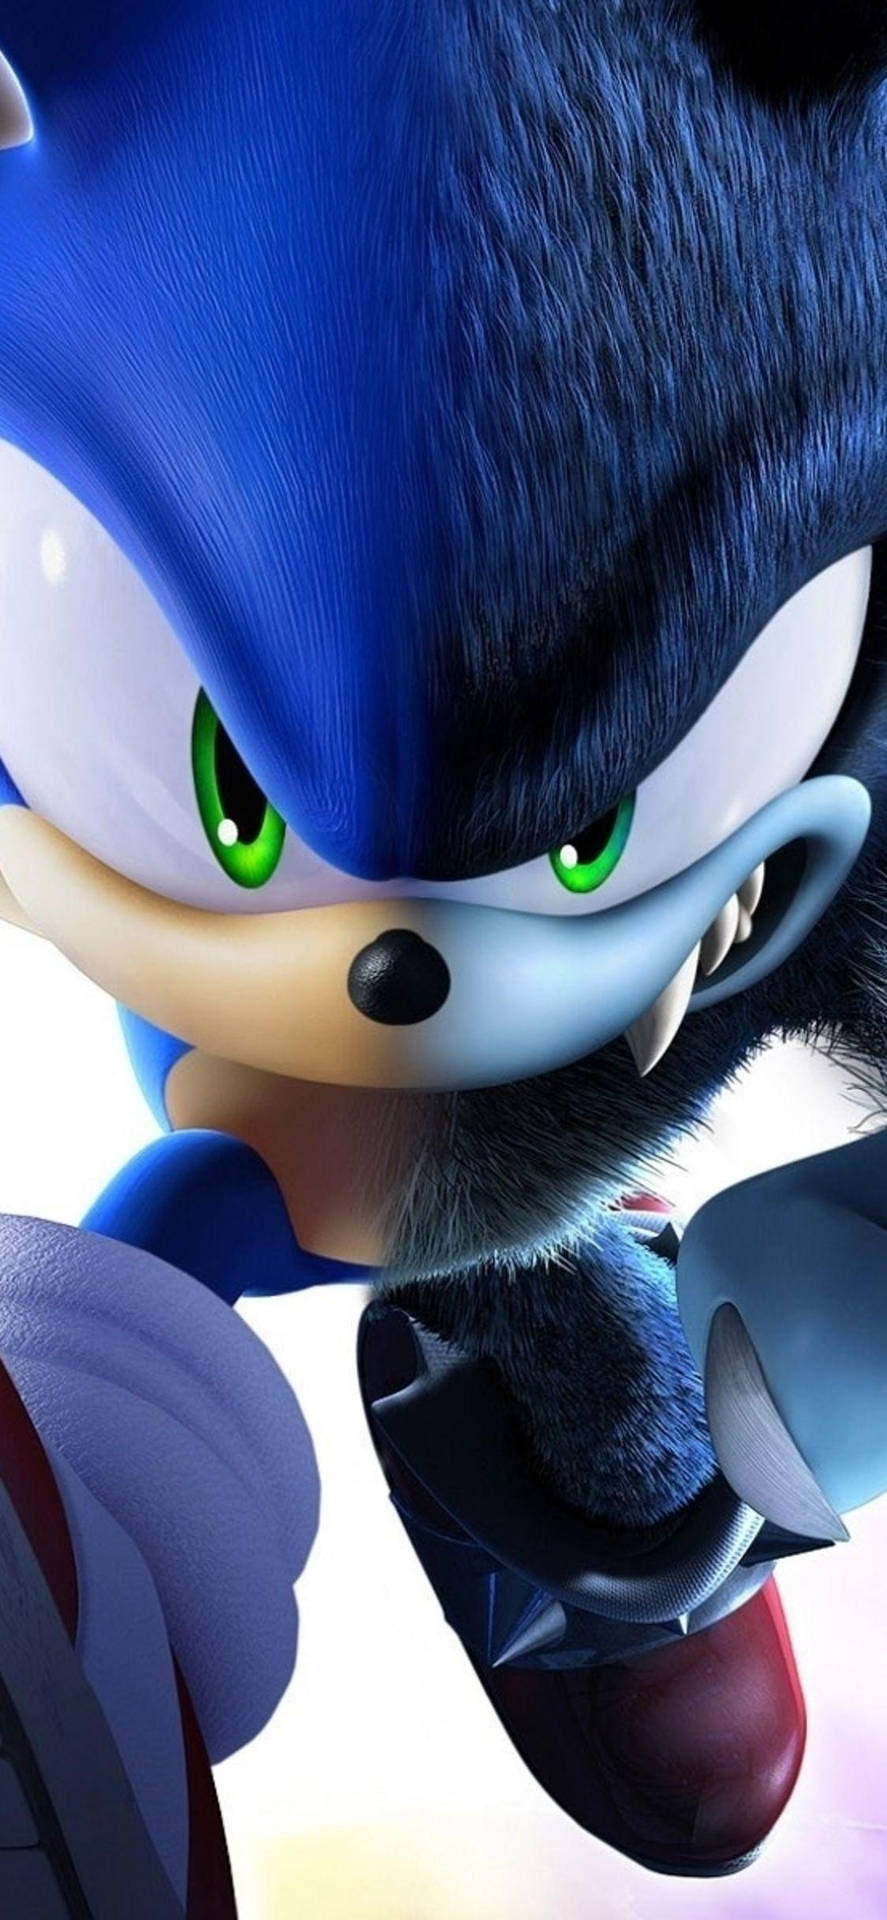 Old Design Of Sonic The Hedgehog Background